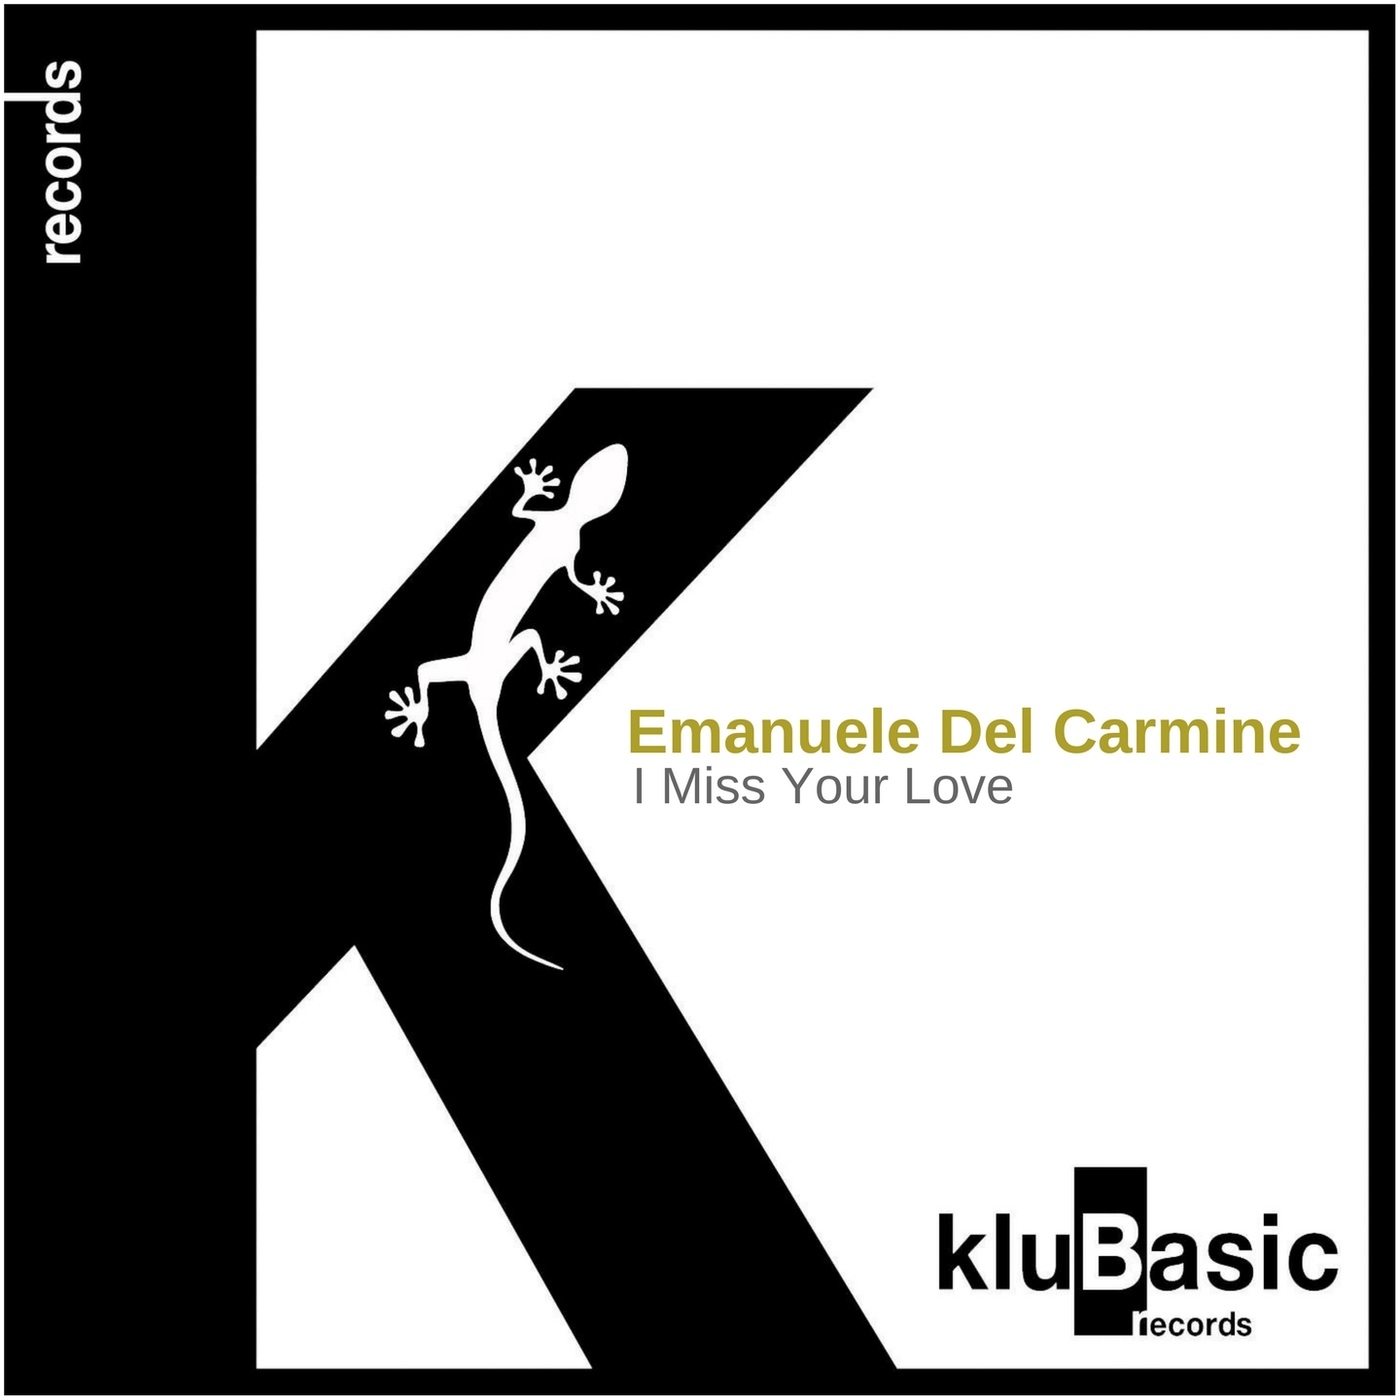 Emanuele Del Carmine - I Miss Your Love / kluBasic Records